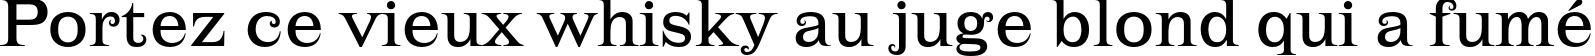 Пример написания шрифтом Lehmann текста на французском